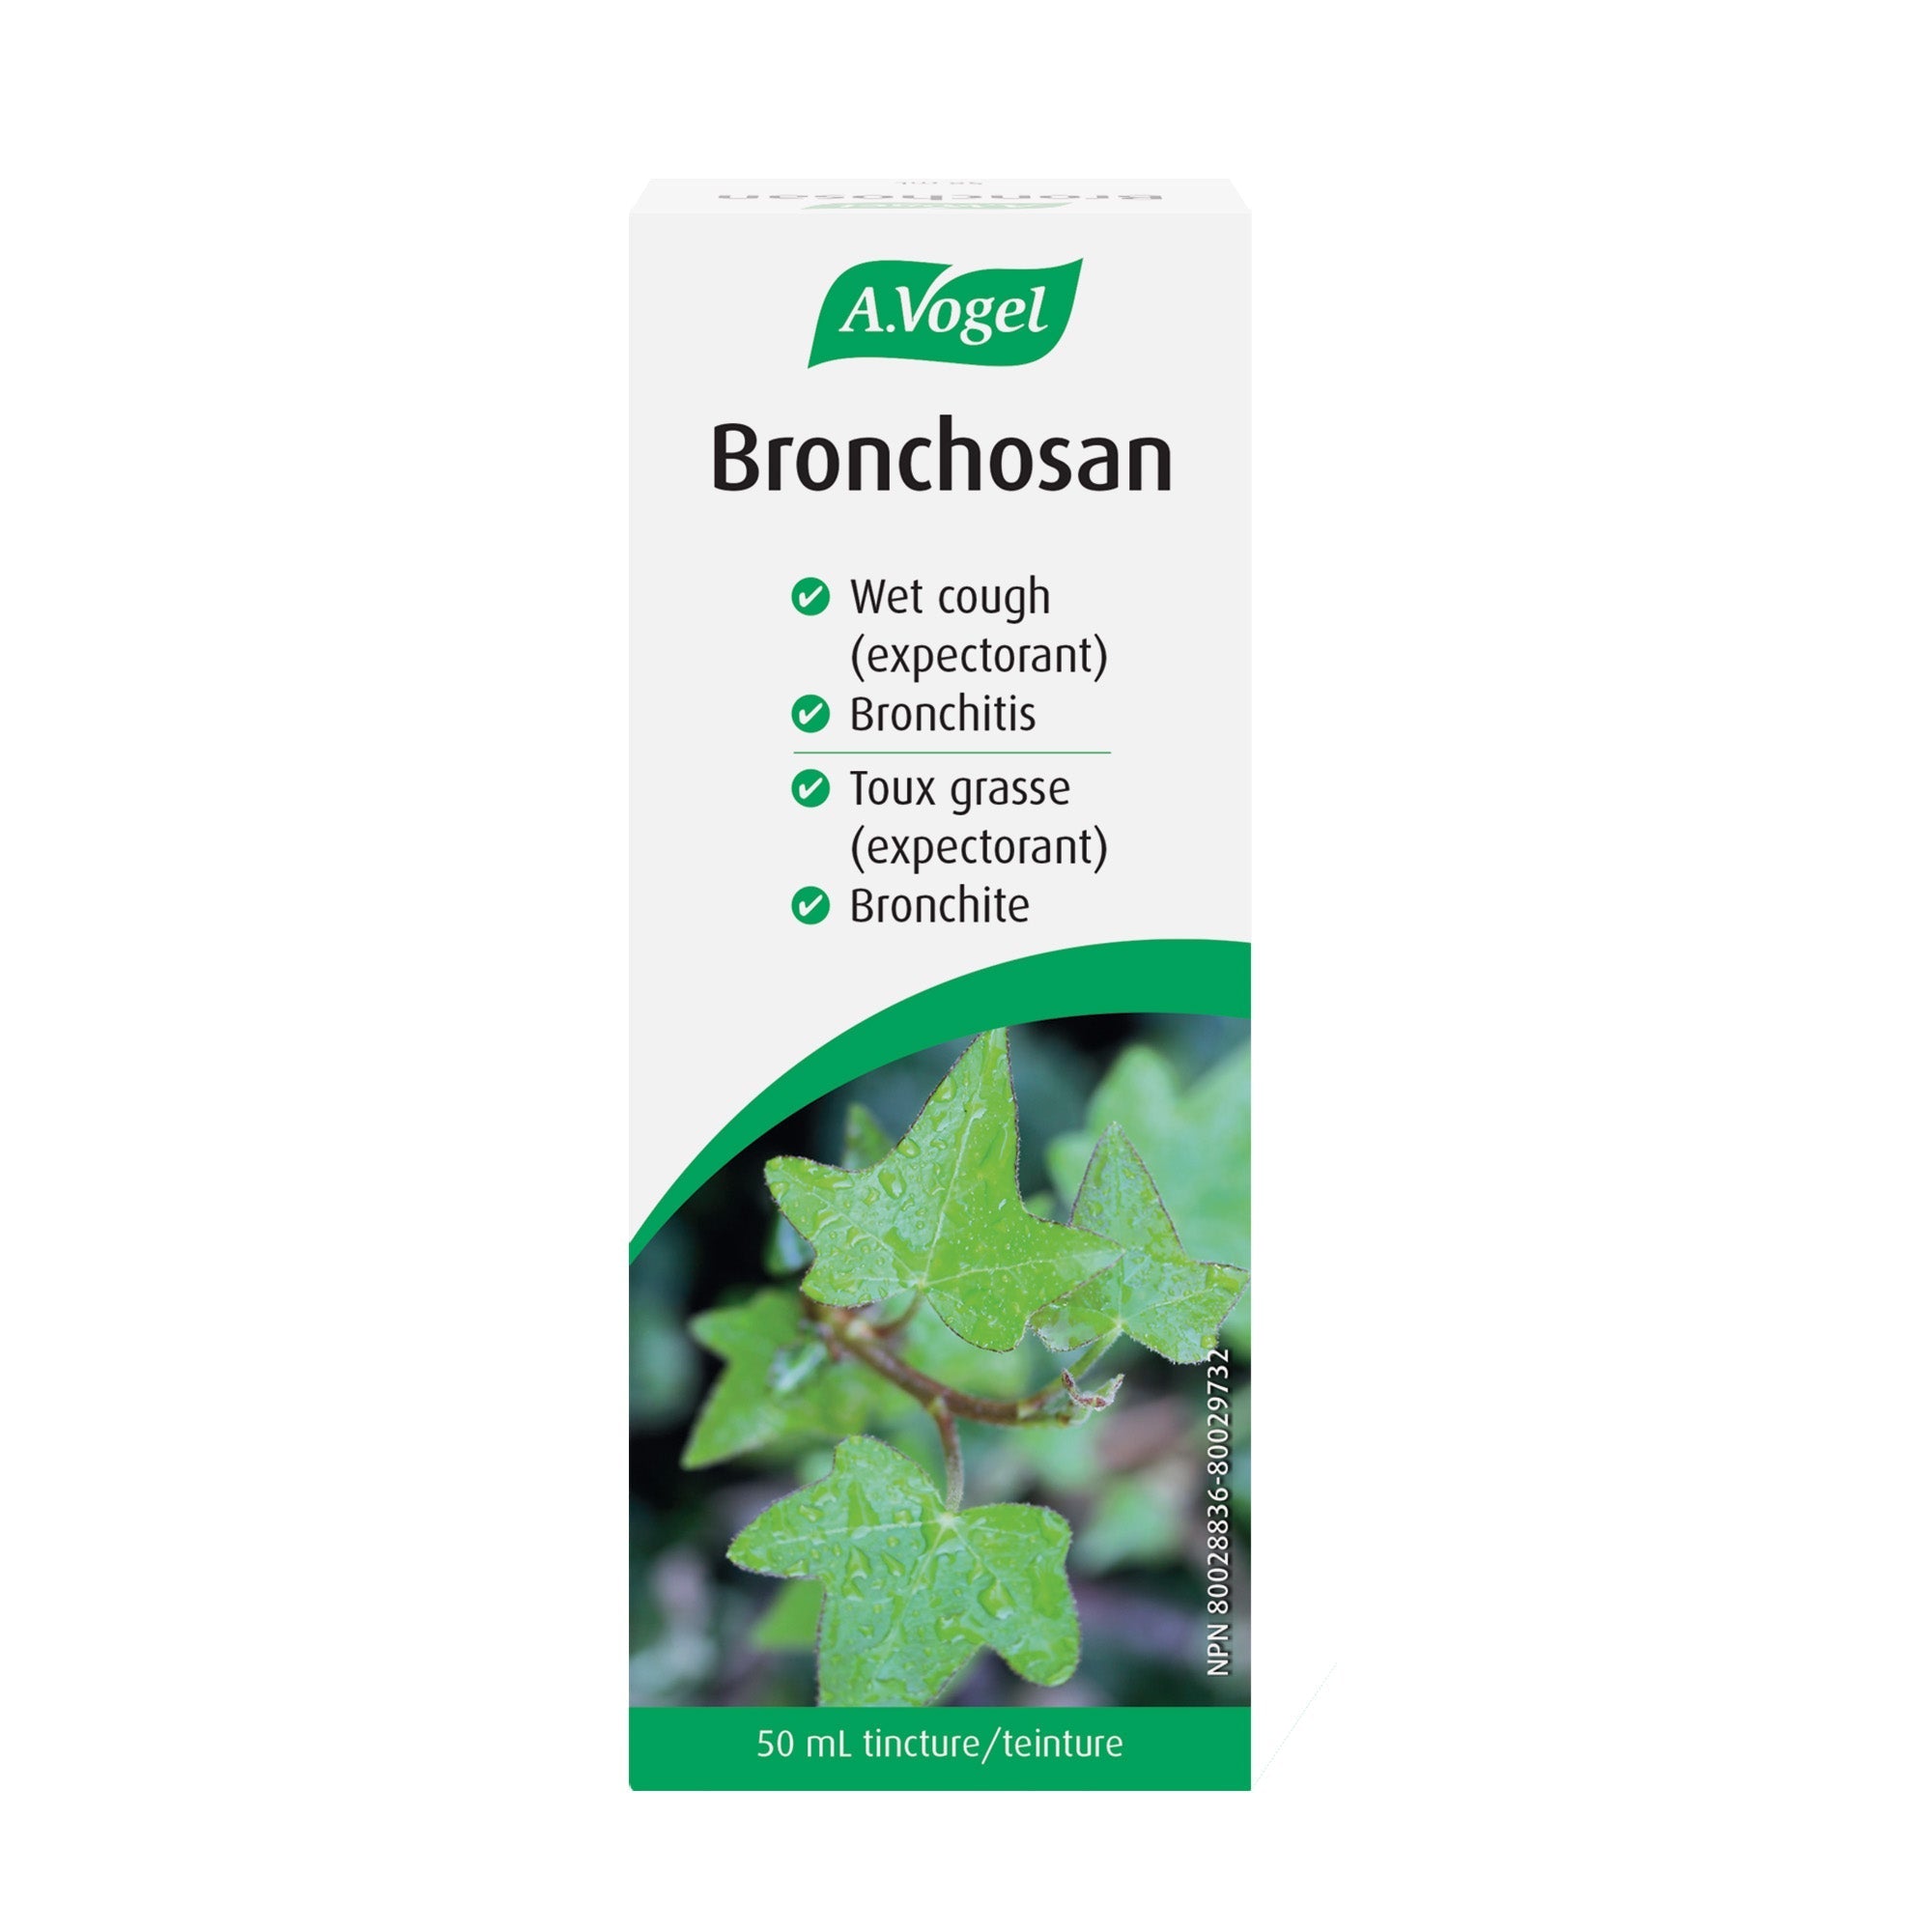 A. Vogel Bronchosan Bronchitis, Cough Treatment 50ml